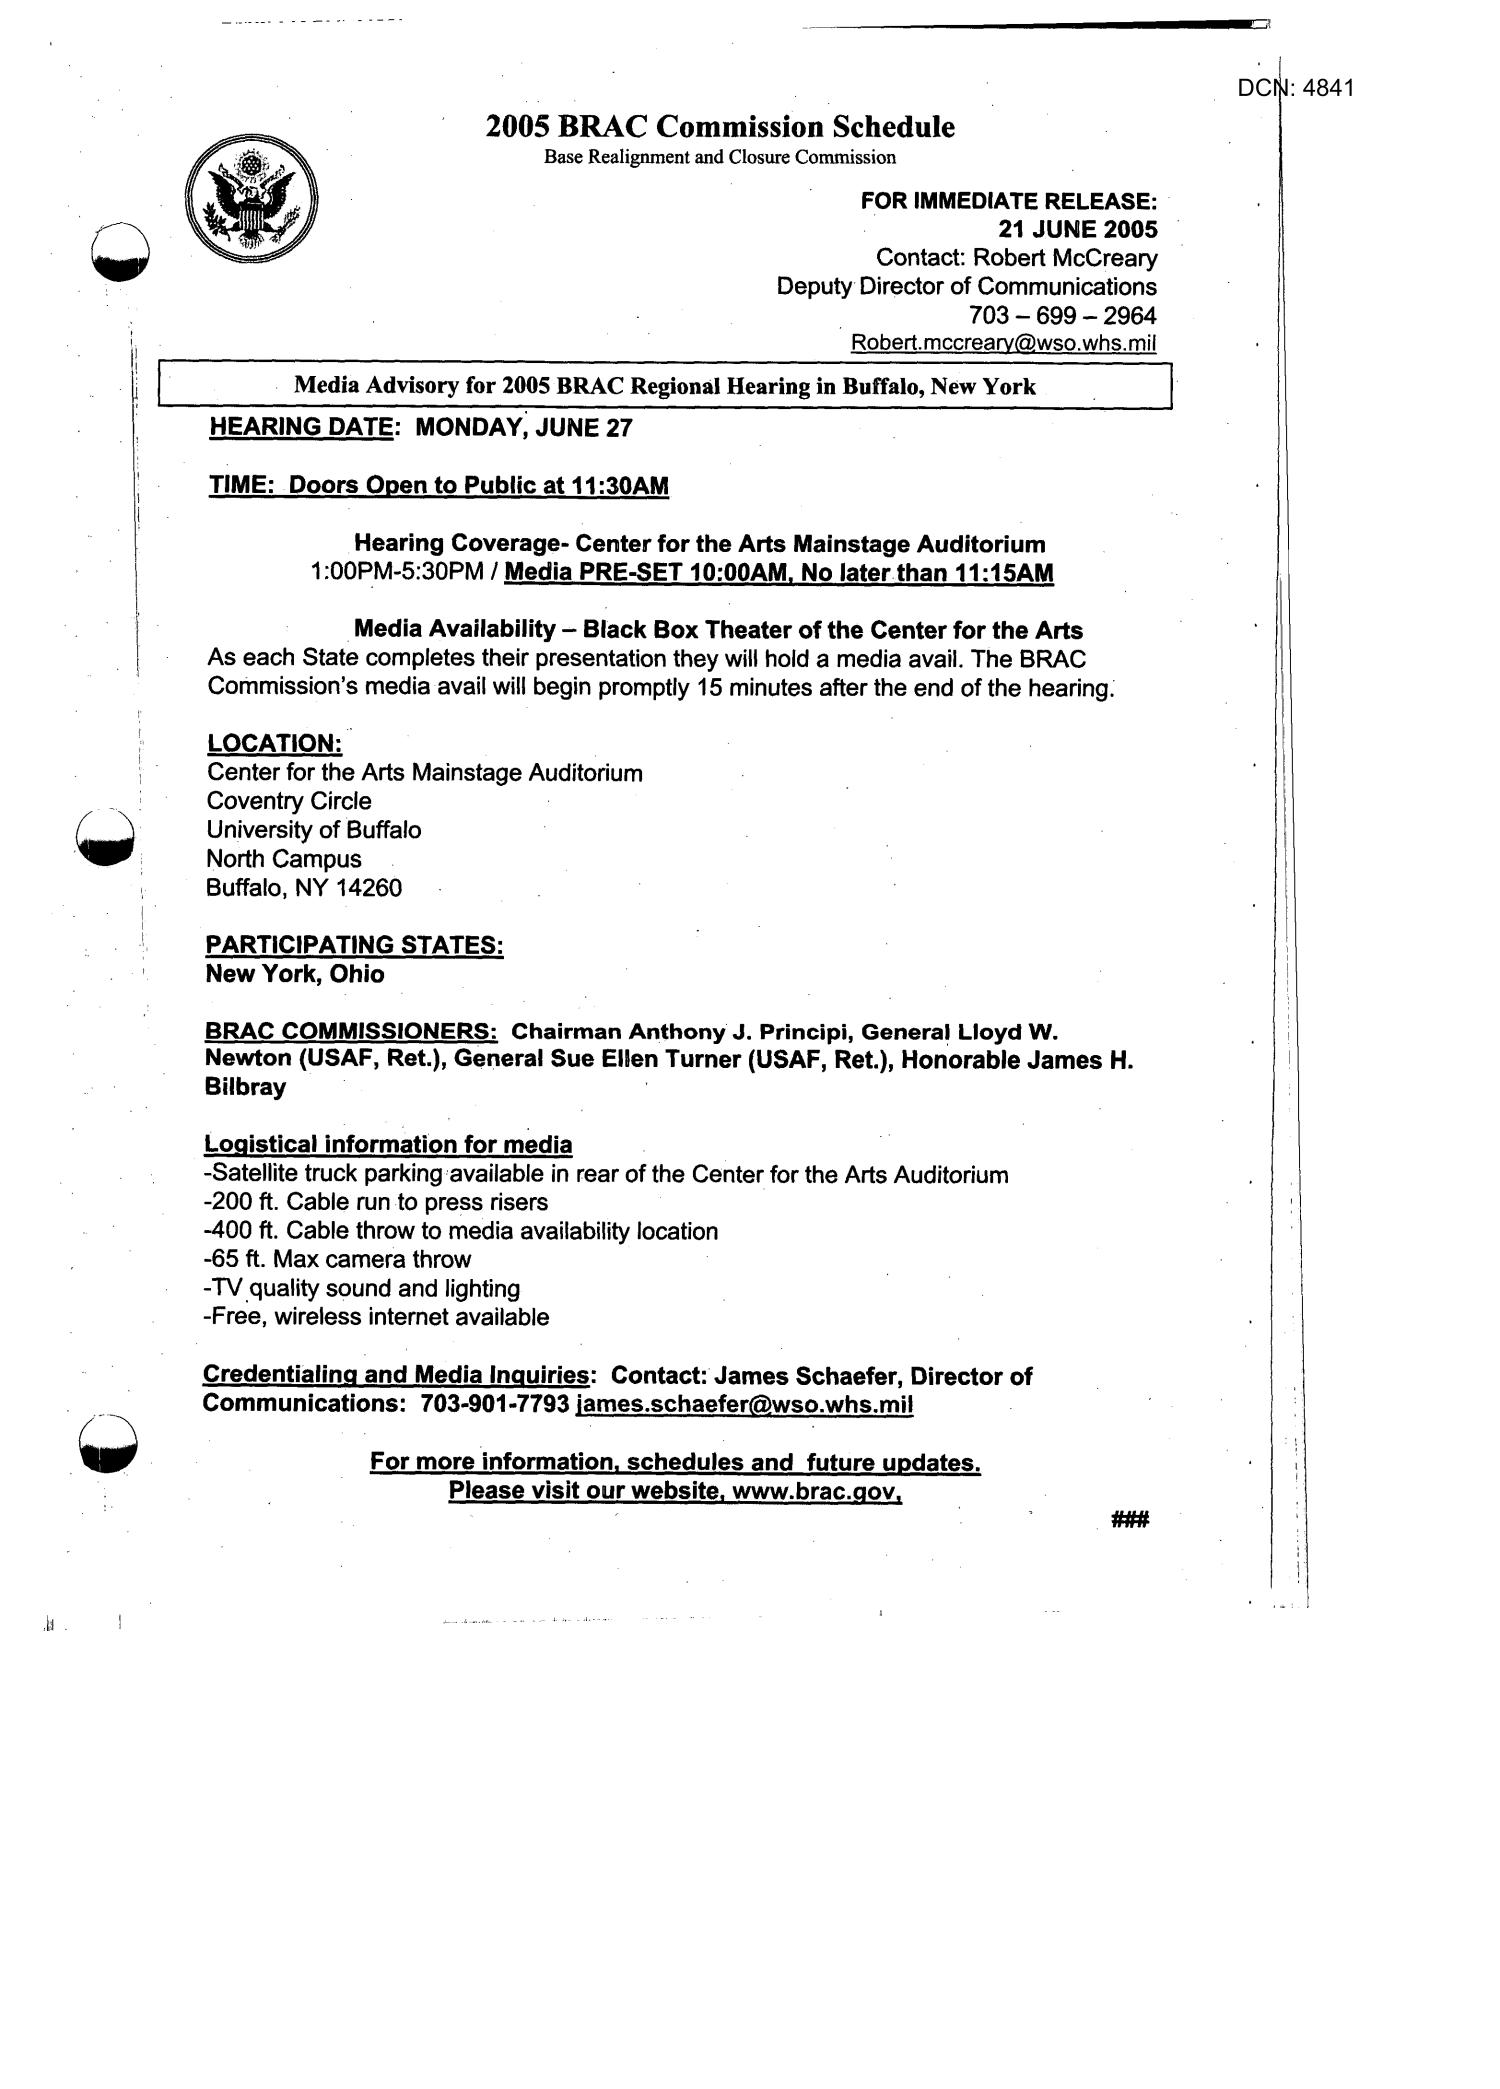 103-06A - RH7 - Media Briefing Book Regional Hearing - June 27, 2005 - Buffalo NY
                                                
                                                    [Sequence #]: 3 of 56
                                                